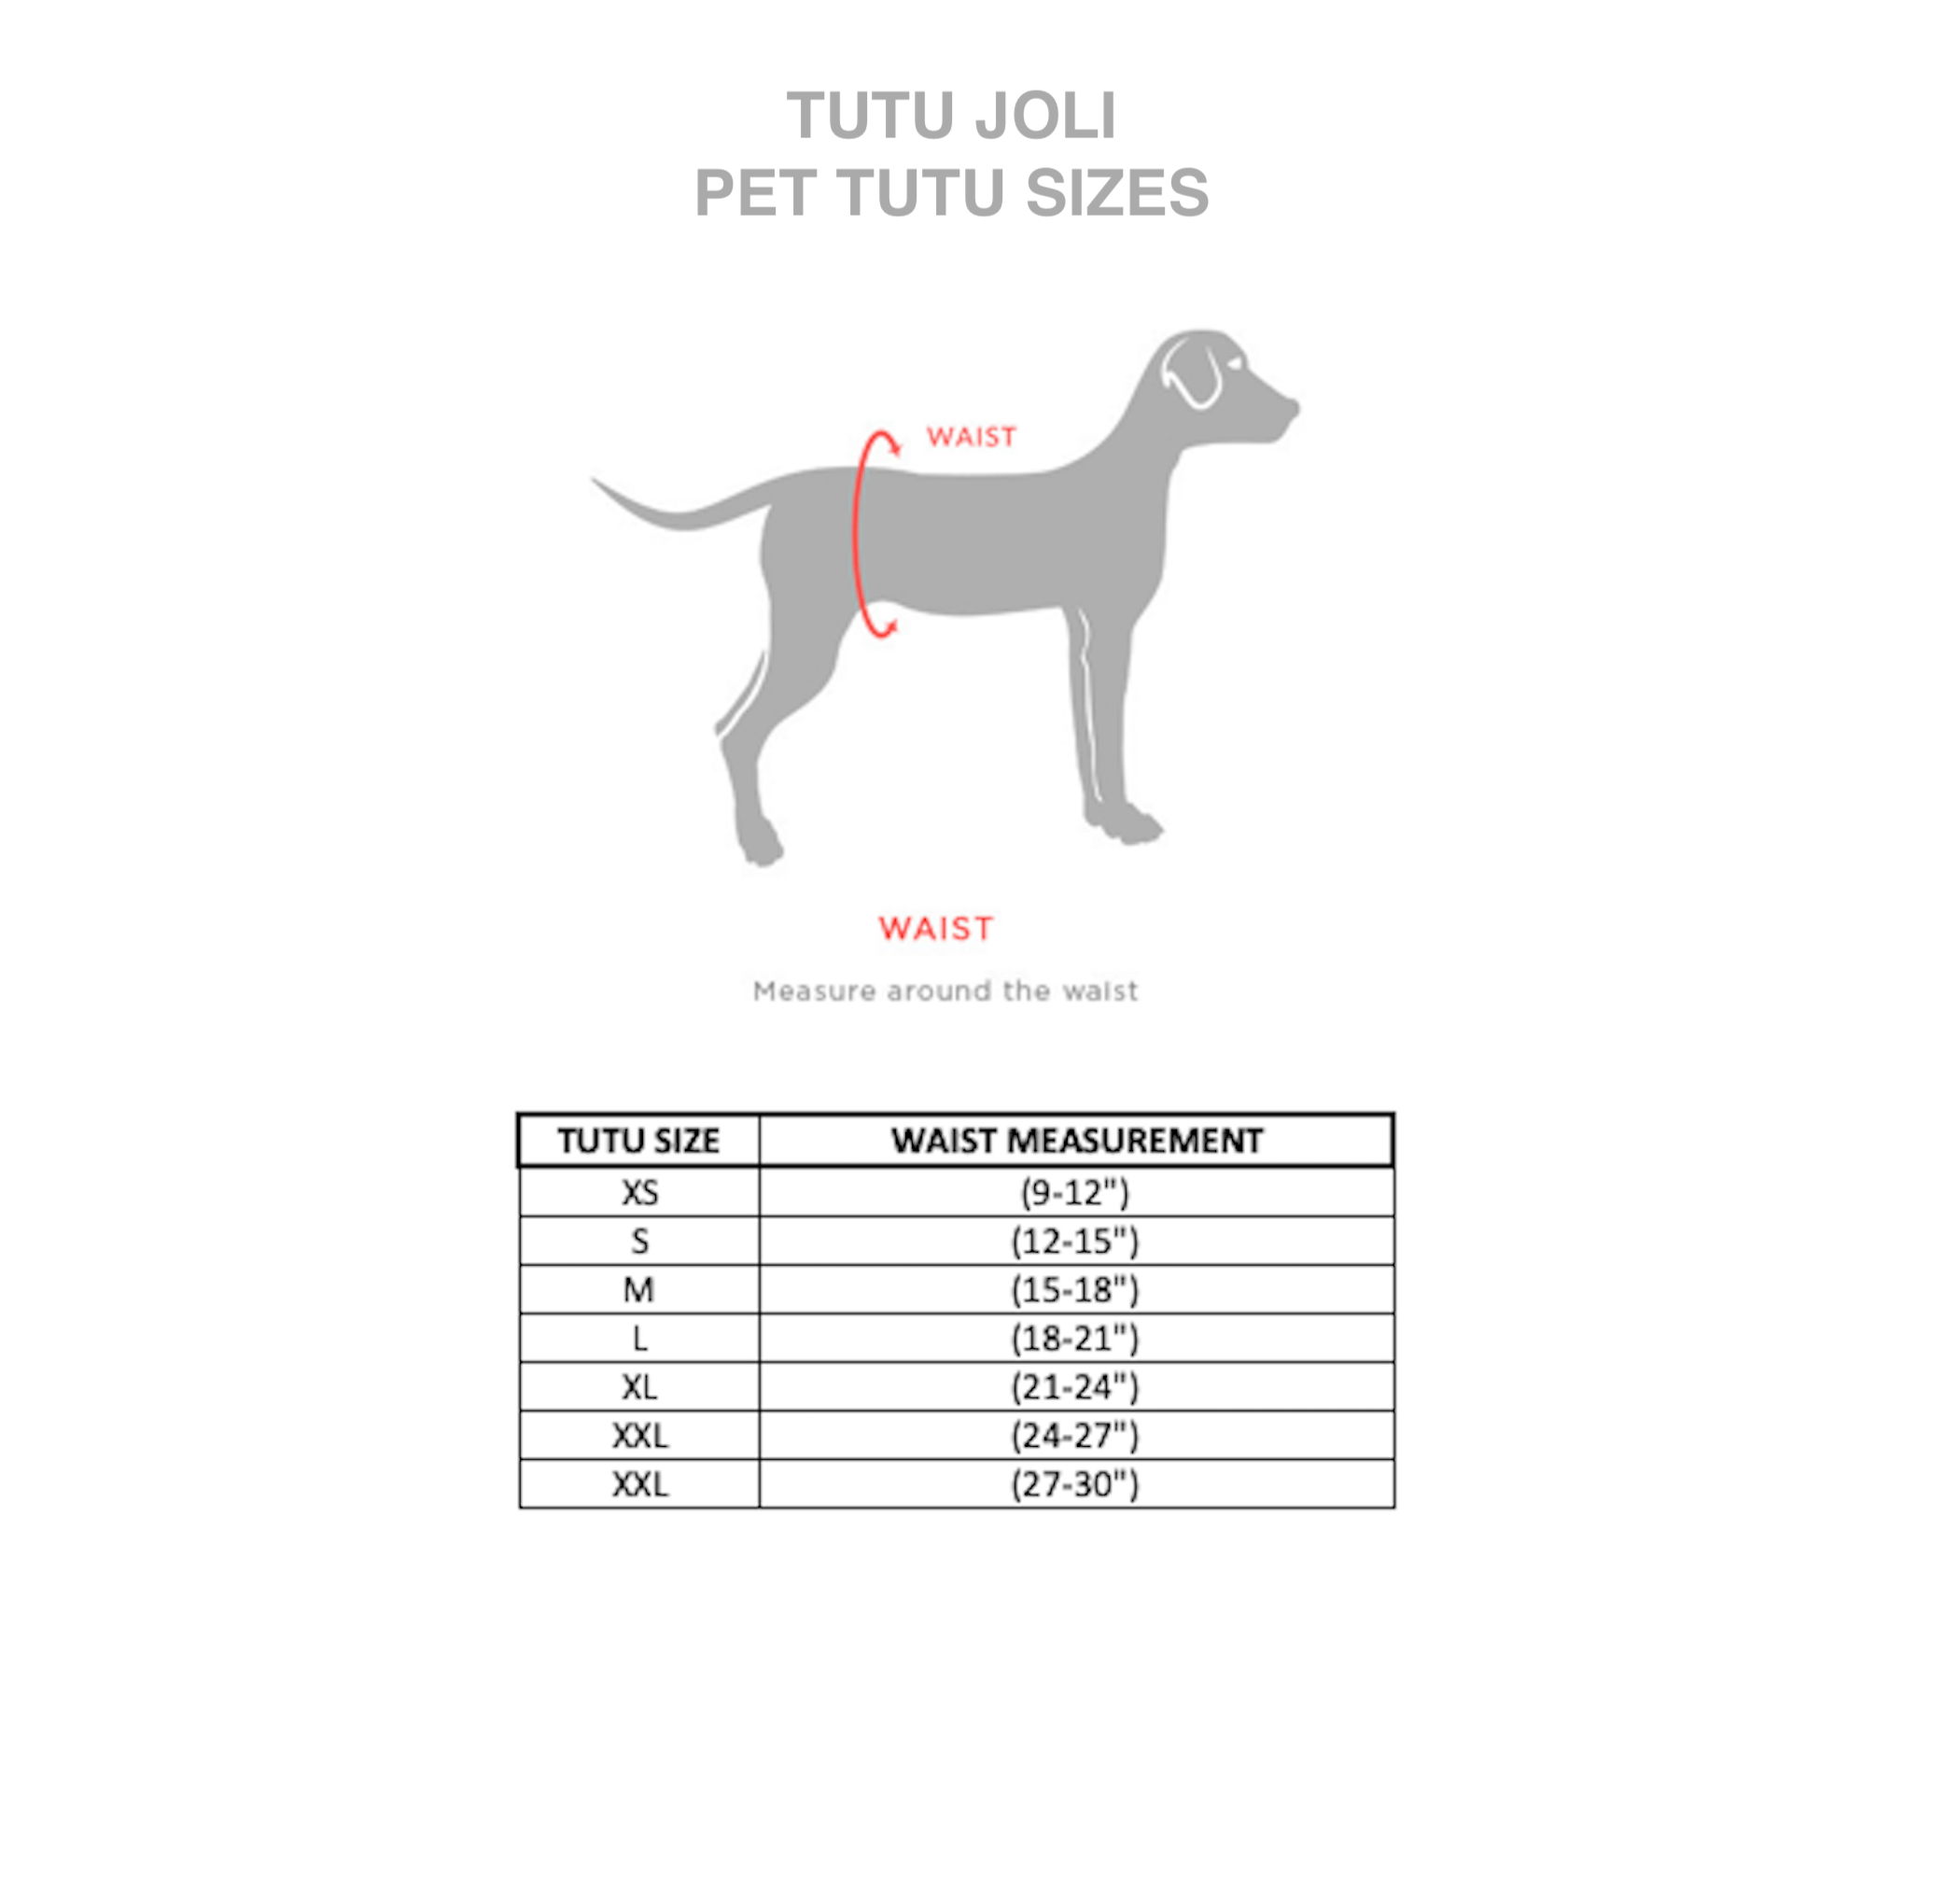 Dog size measurements, tutu joli, pet sizing, pet sizes for tutus, pet outfit measure, how to measure a  dog for a wedding tutu costume